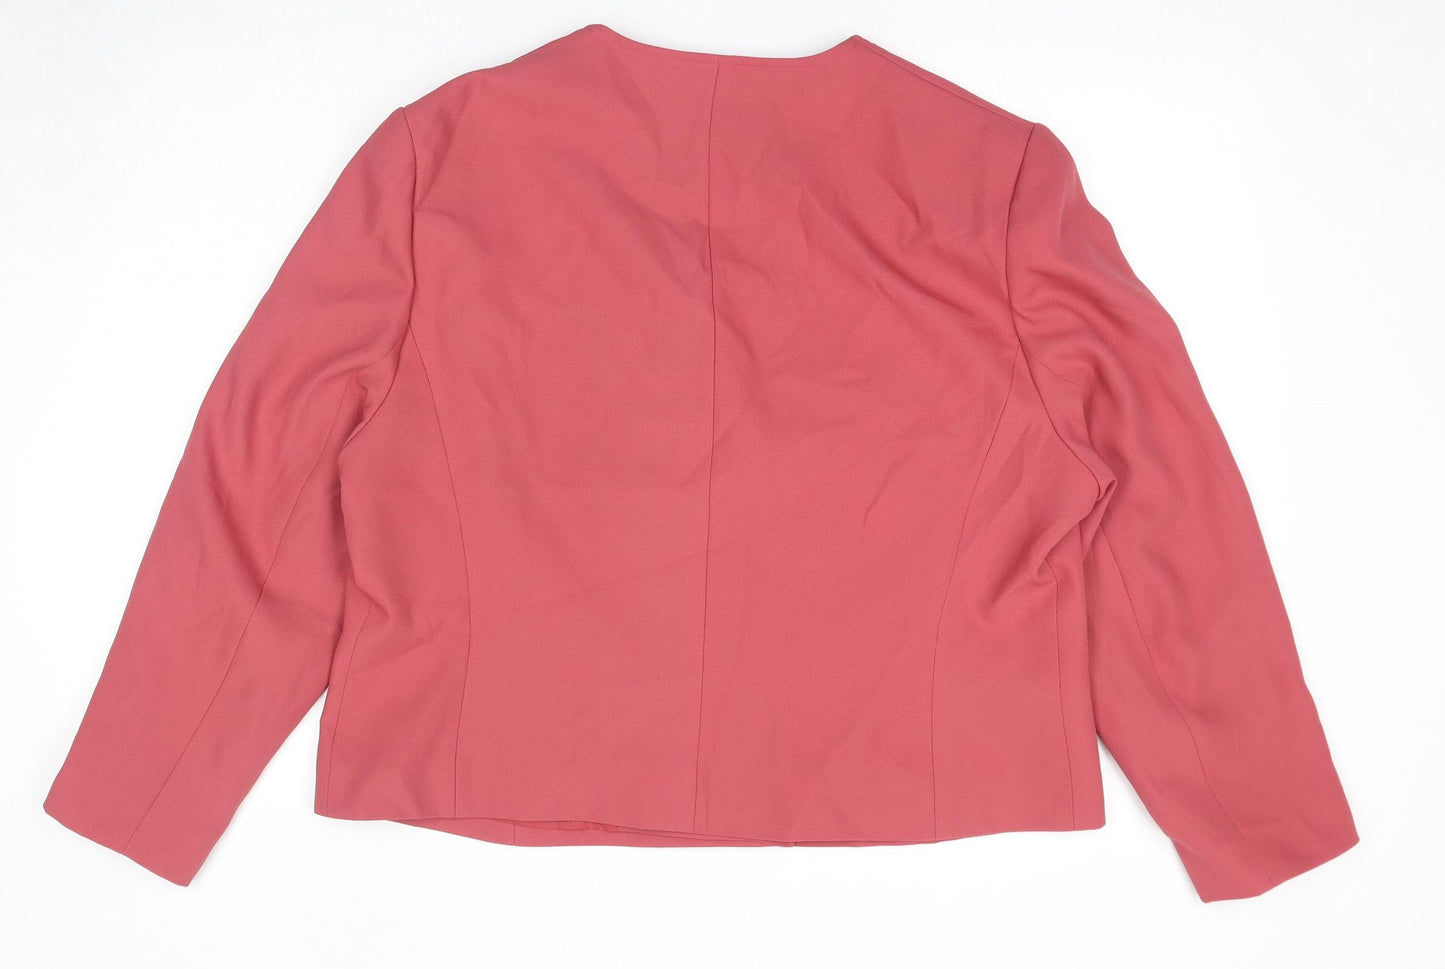 Eastex Womens Pink Jacket Blazer Size 20 Button